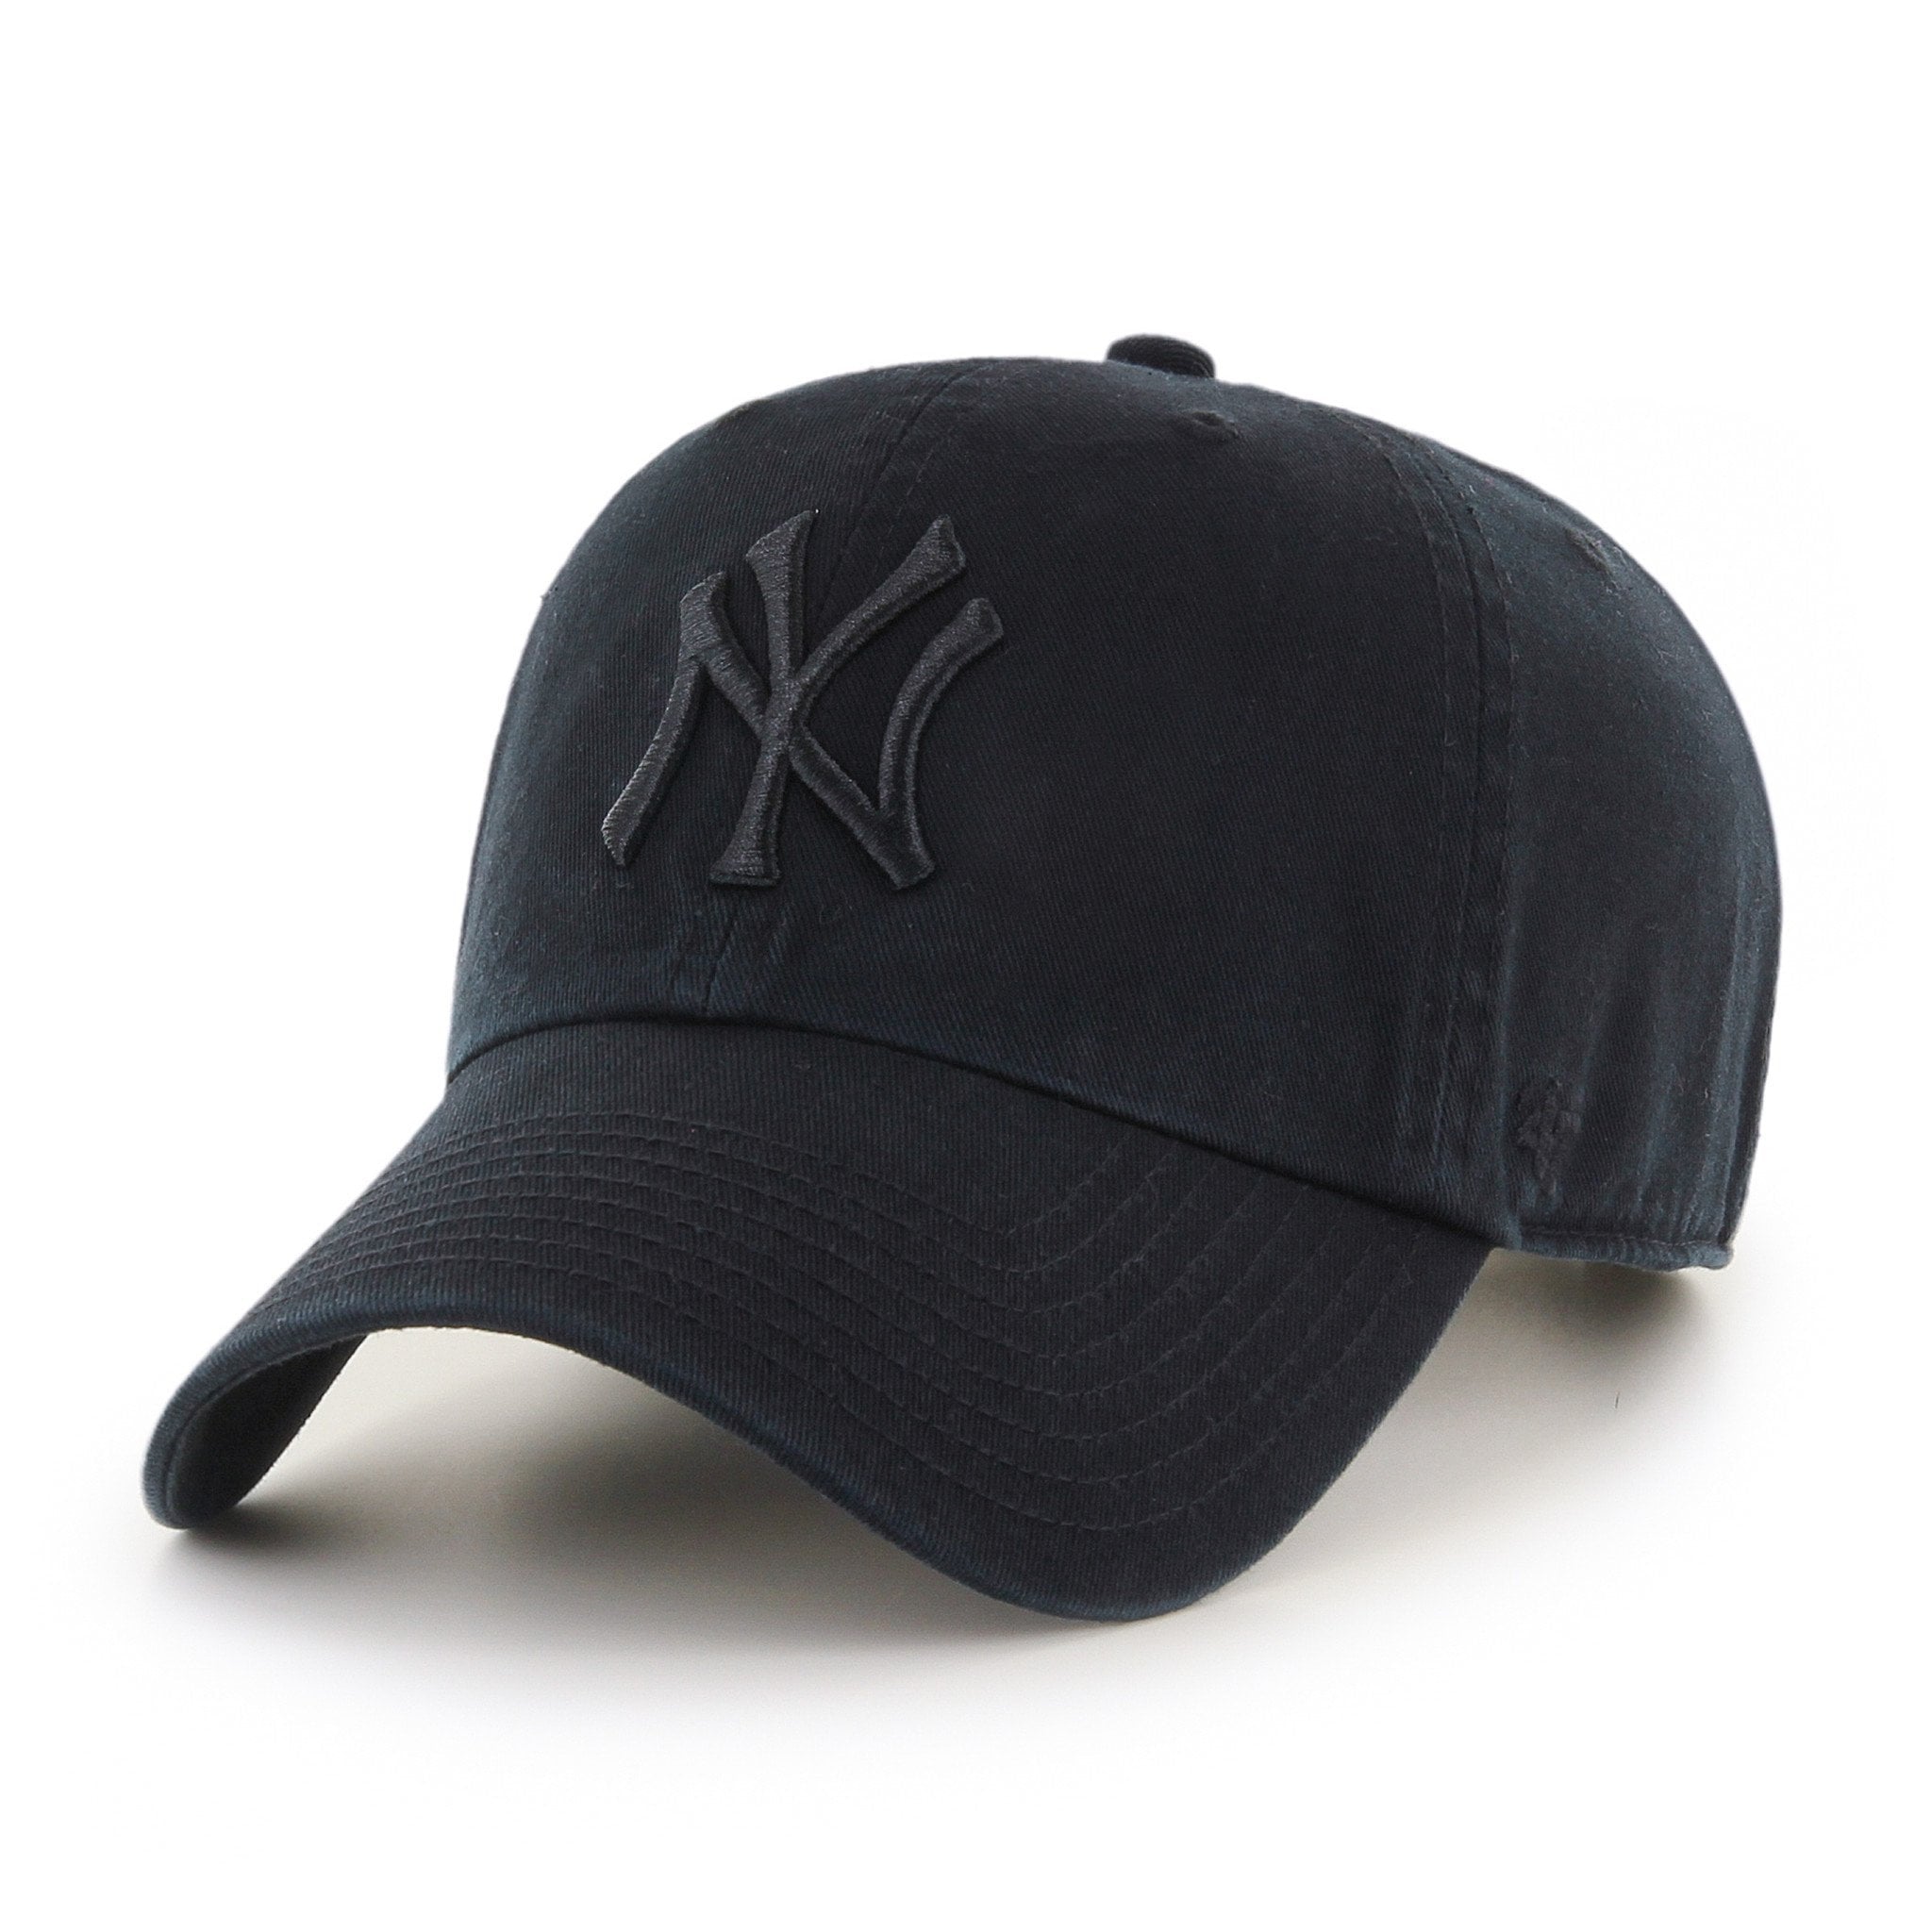 New York Yankees Sundae Helmet Tee Shirt 5T / White